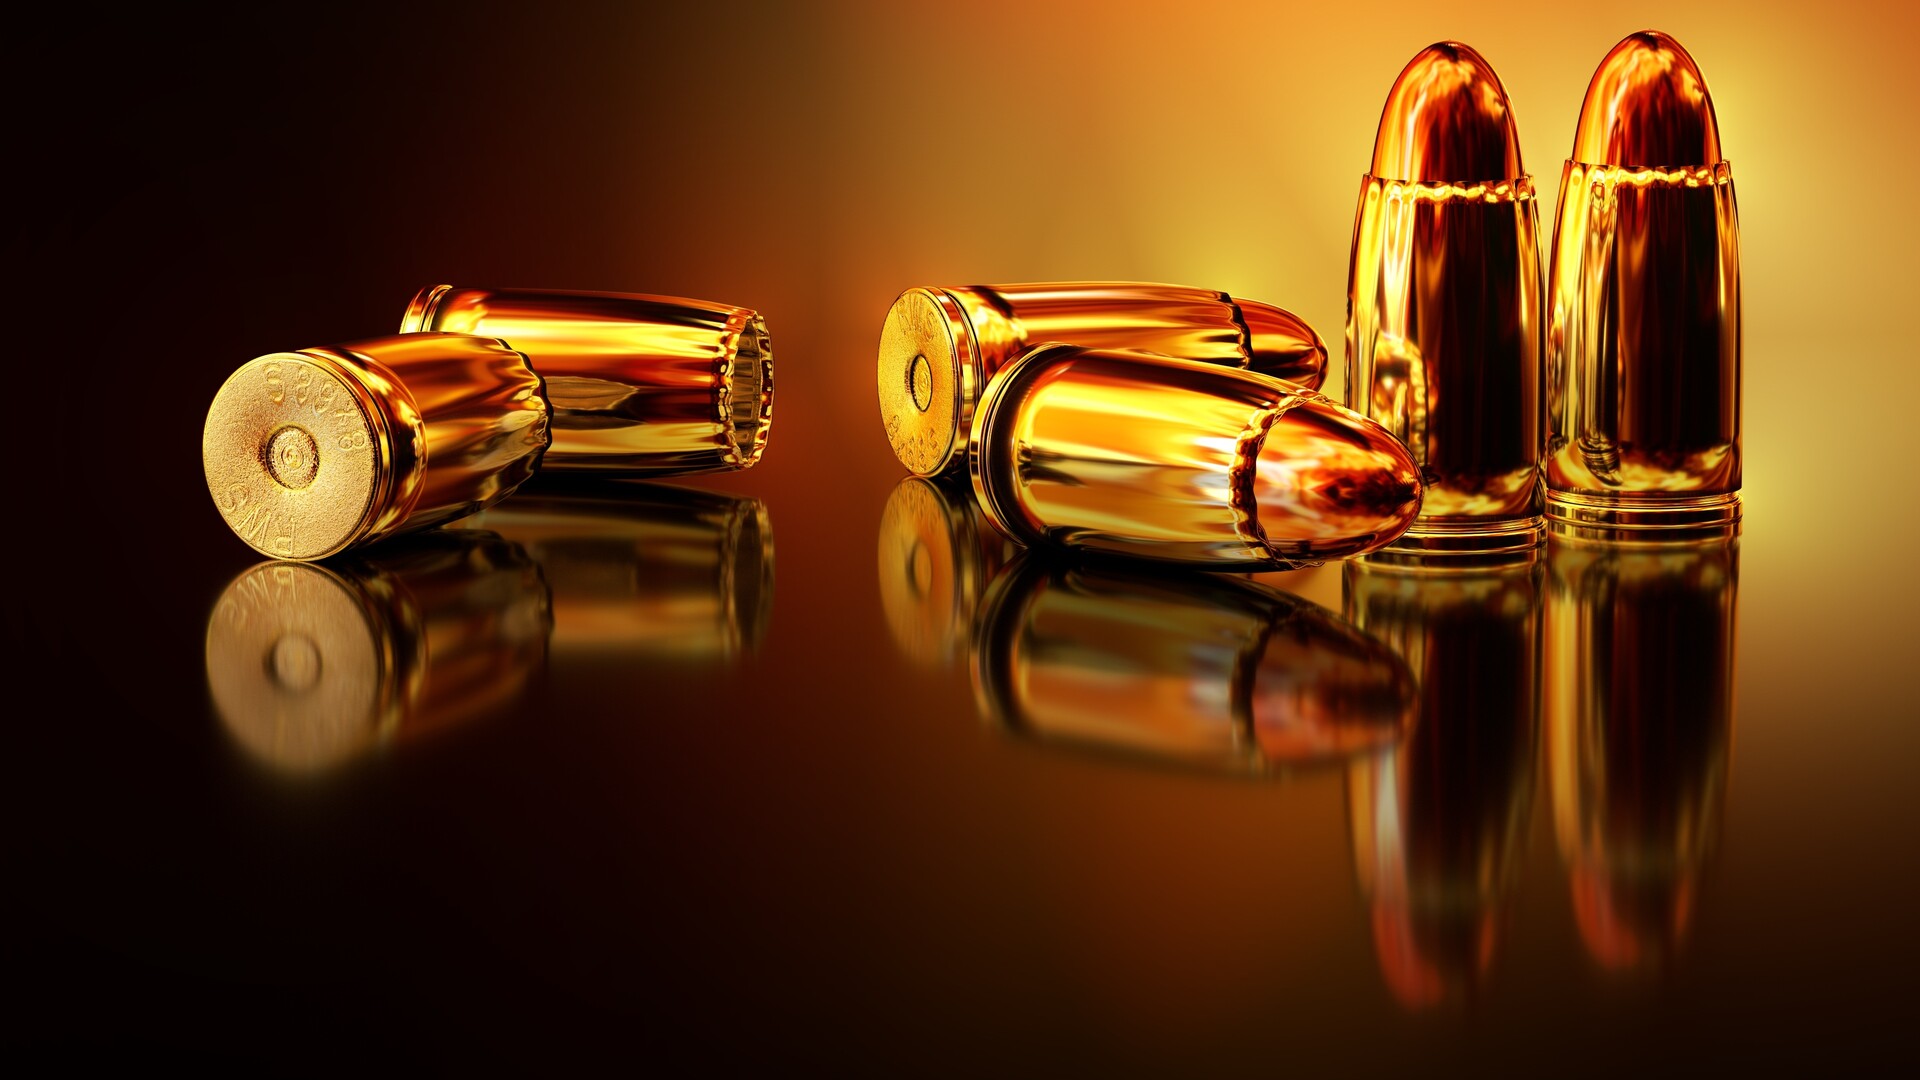 General 1920x1080 bullet ammunition reflection simple background